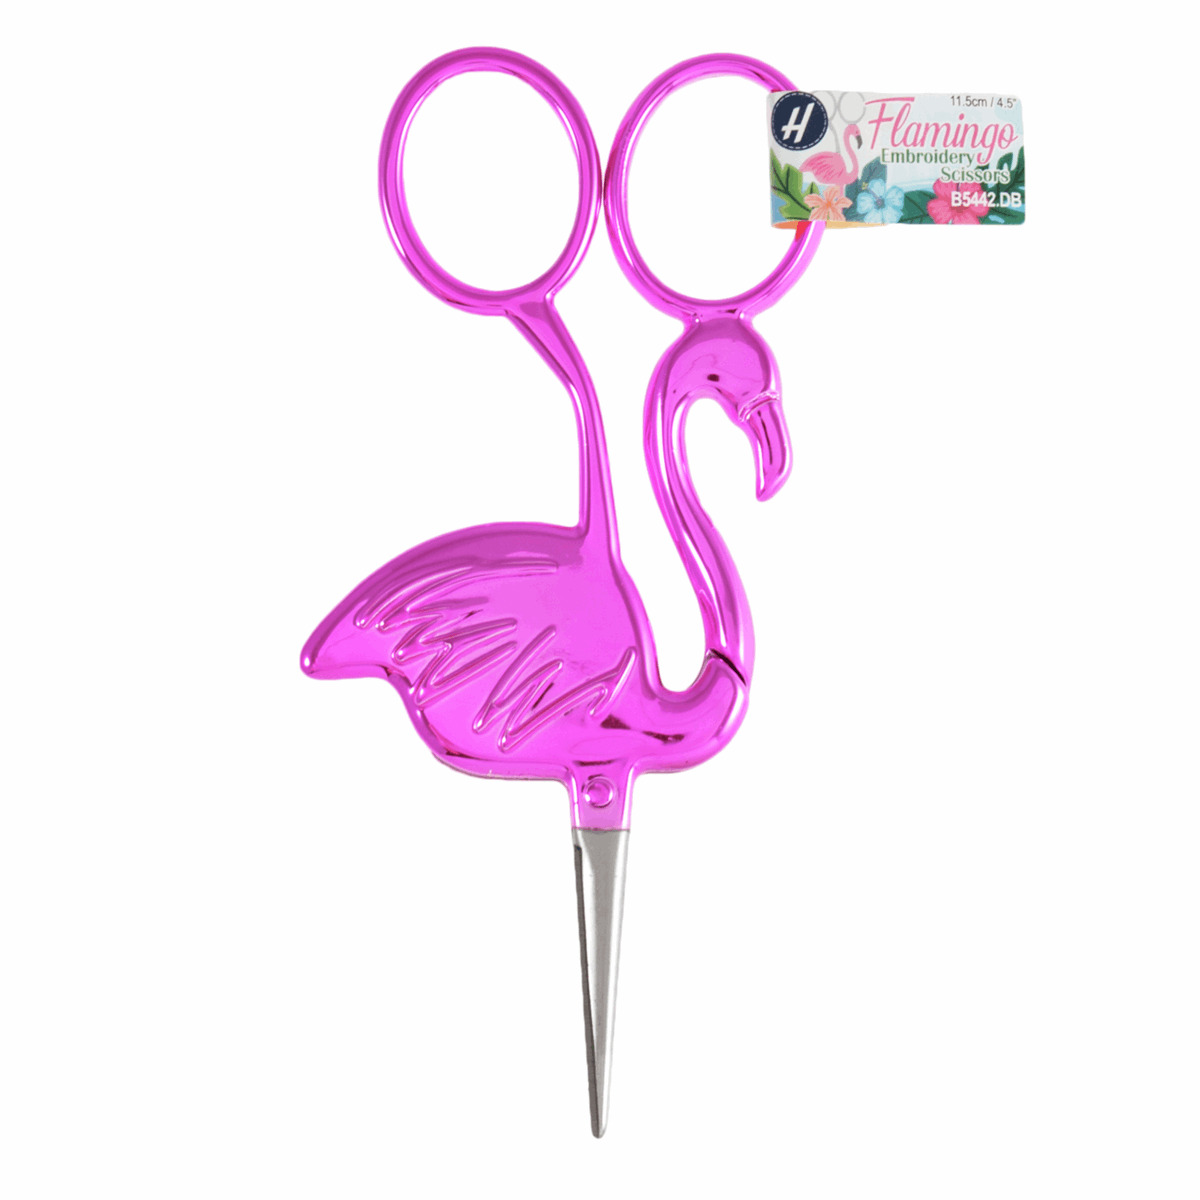 Sewing,Hemline Pink Flamingo Embroidery Scissors 11.5cm/4.5 Cute